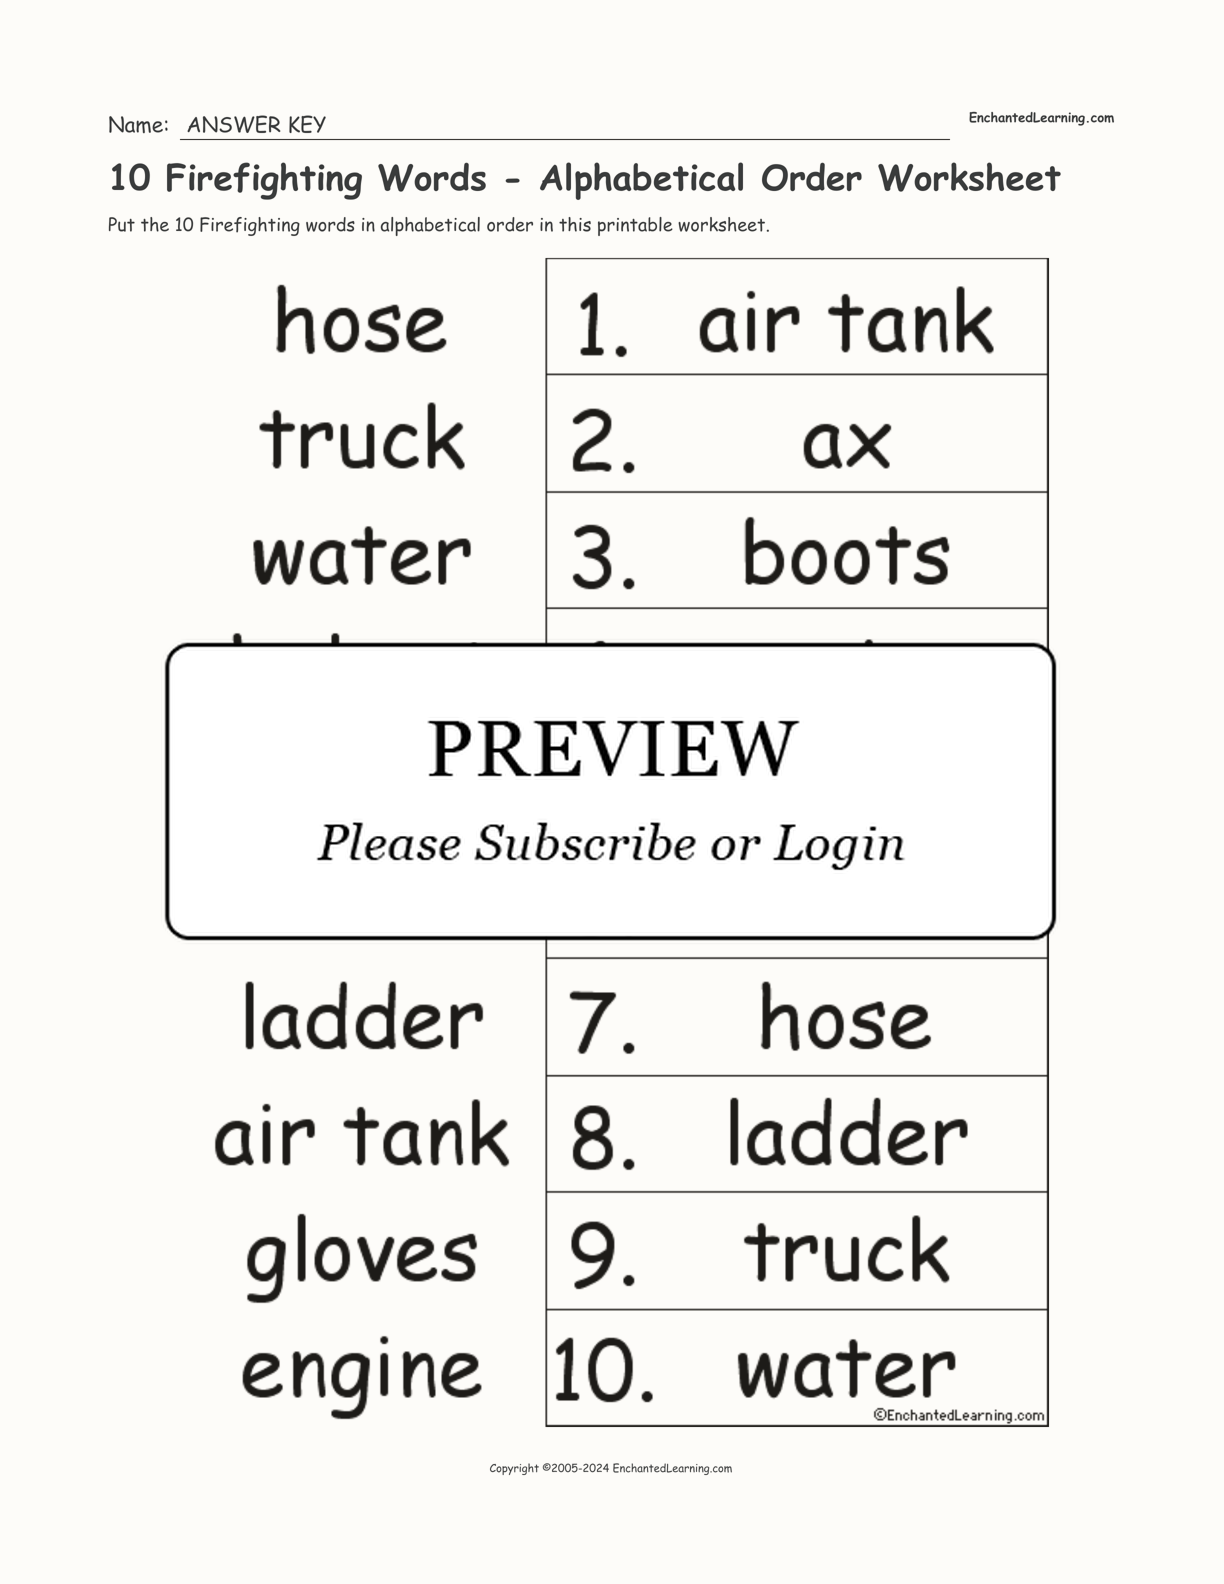 10 Firefighting Words - Alphabetical Order Worksheet interactive worksheet page 2